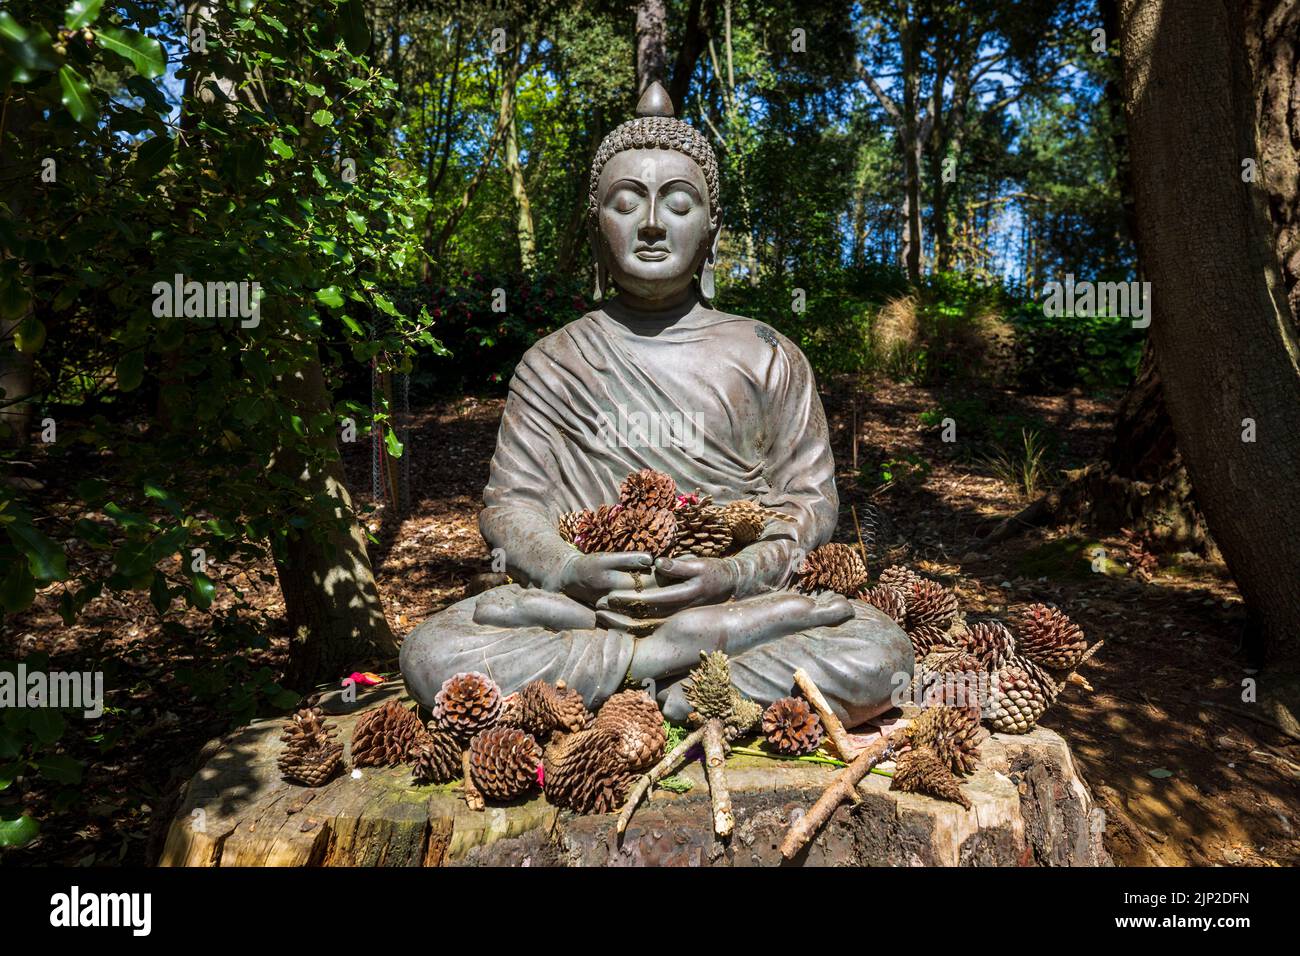 A statue of Buddha at Abbotsbury Subtropical Gardens, Dorset, England Stock Photo